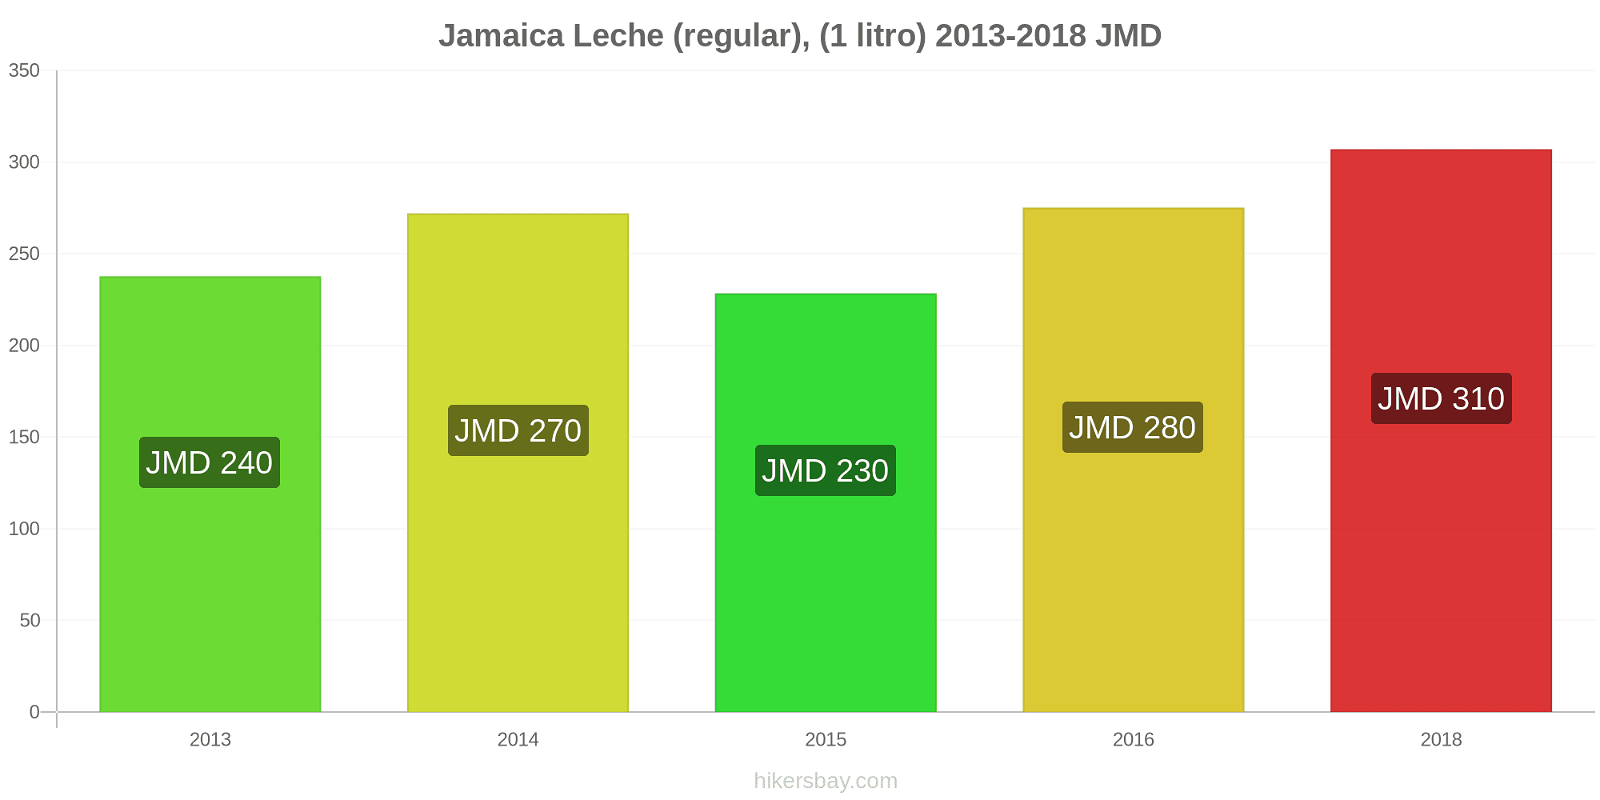 Jamaica cambios de precios Leche (Regular), (1 litro) hikersbay.com